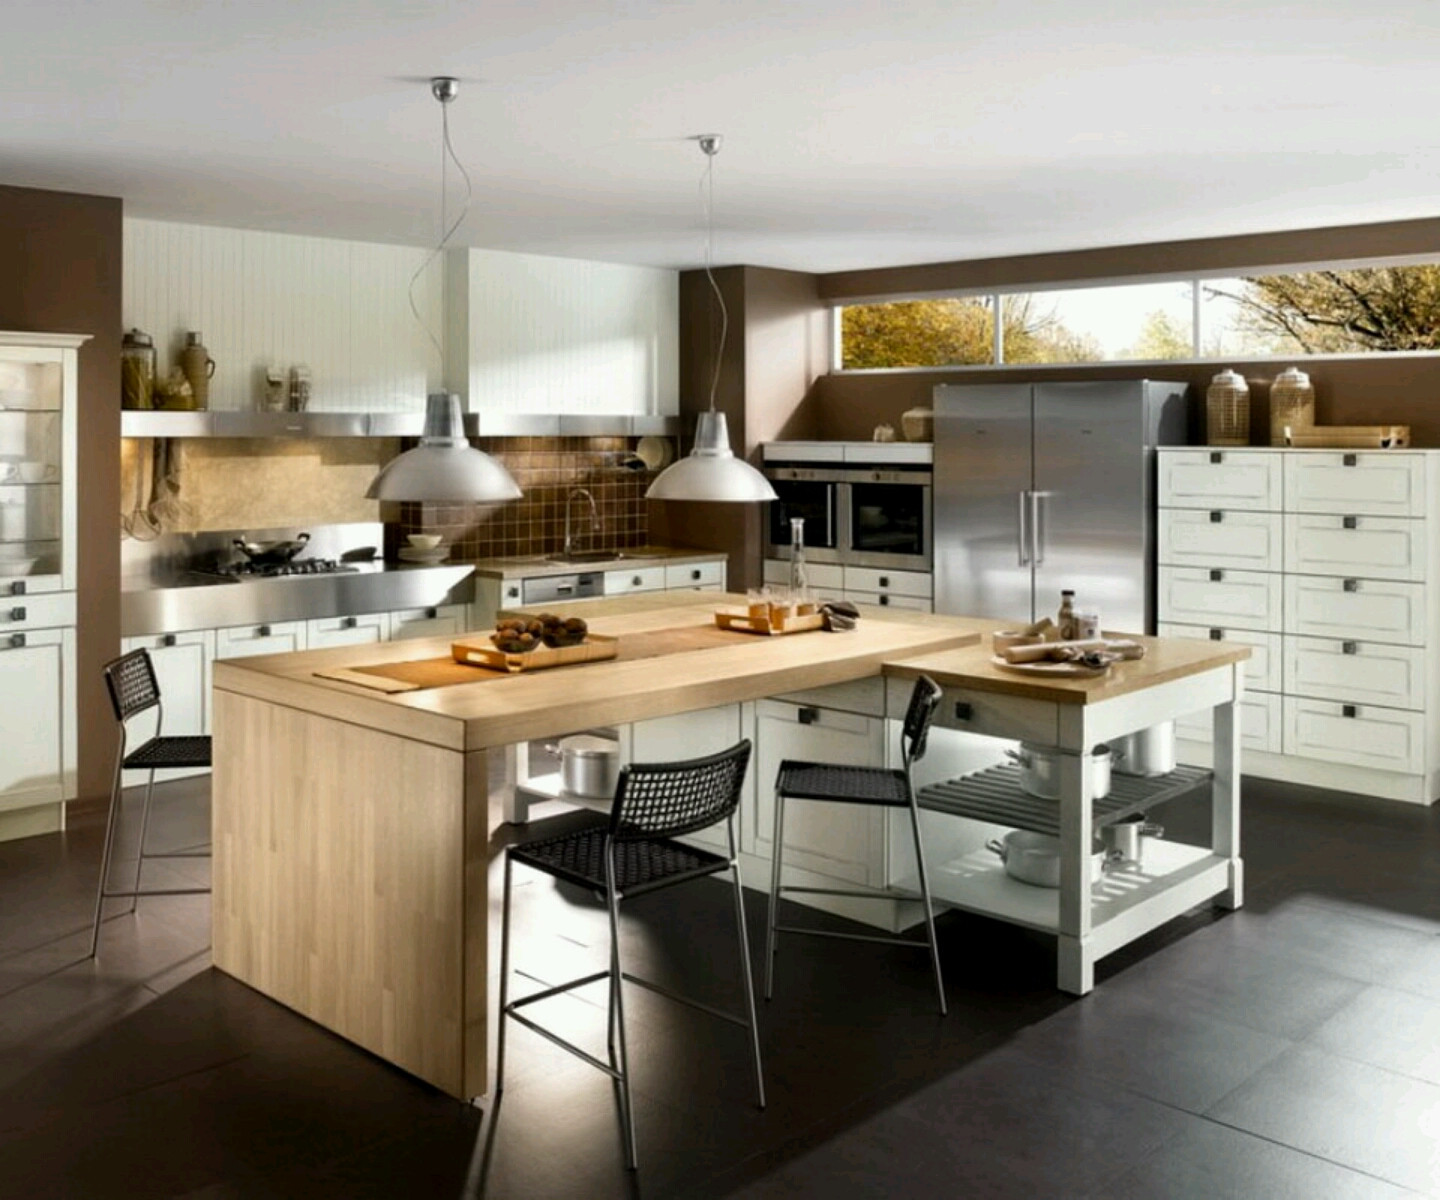 Best ideas about Modern Kitchen Decor Ideas
. Save or Pin New home designs latest Modern kitchen designs ideas Now.